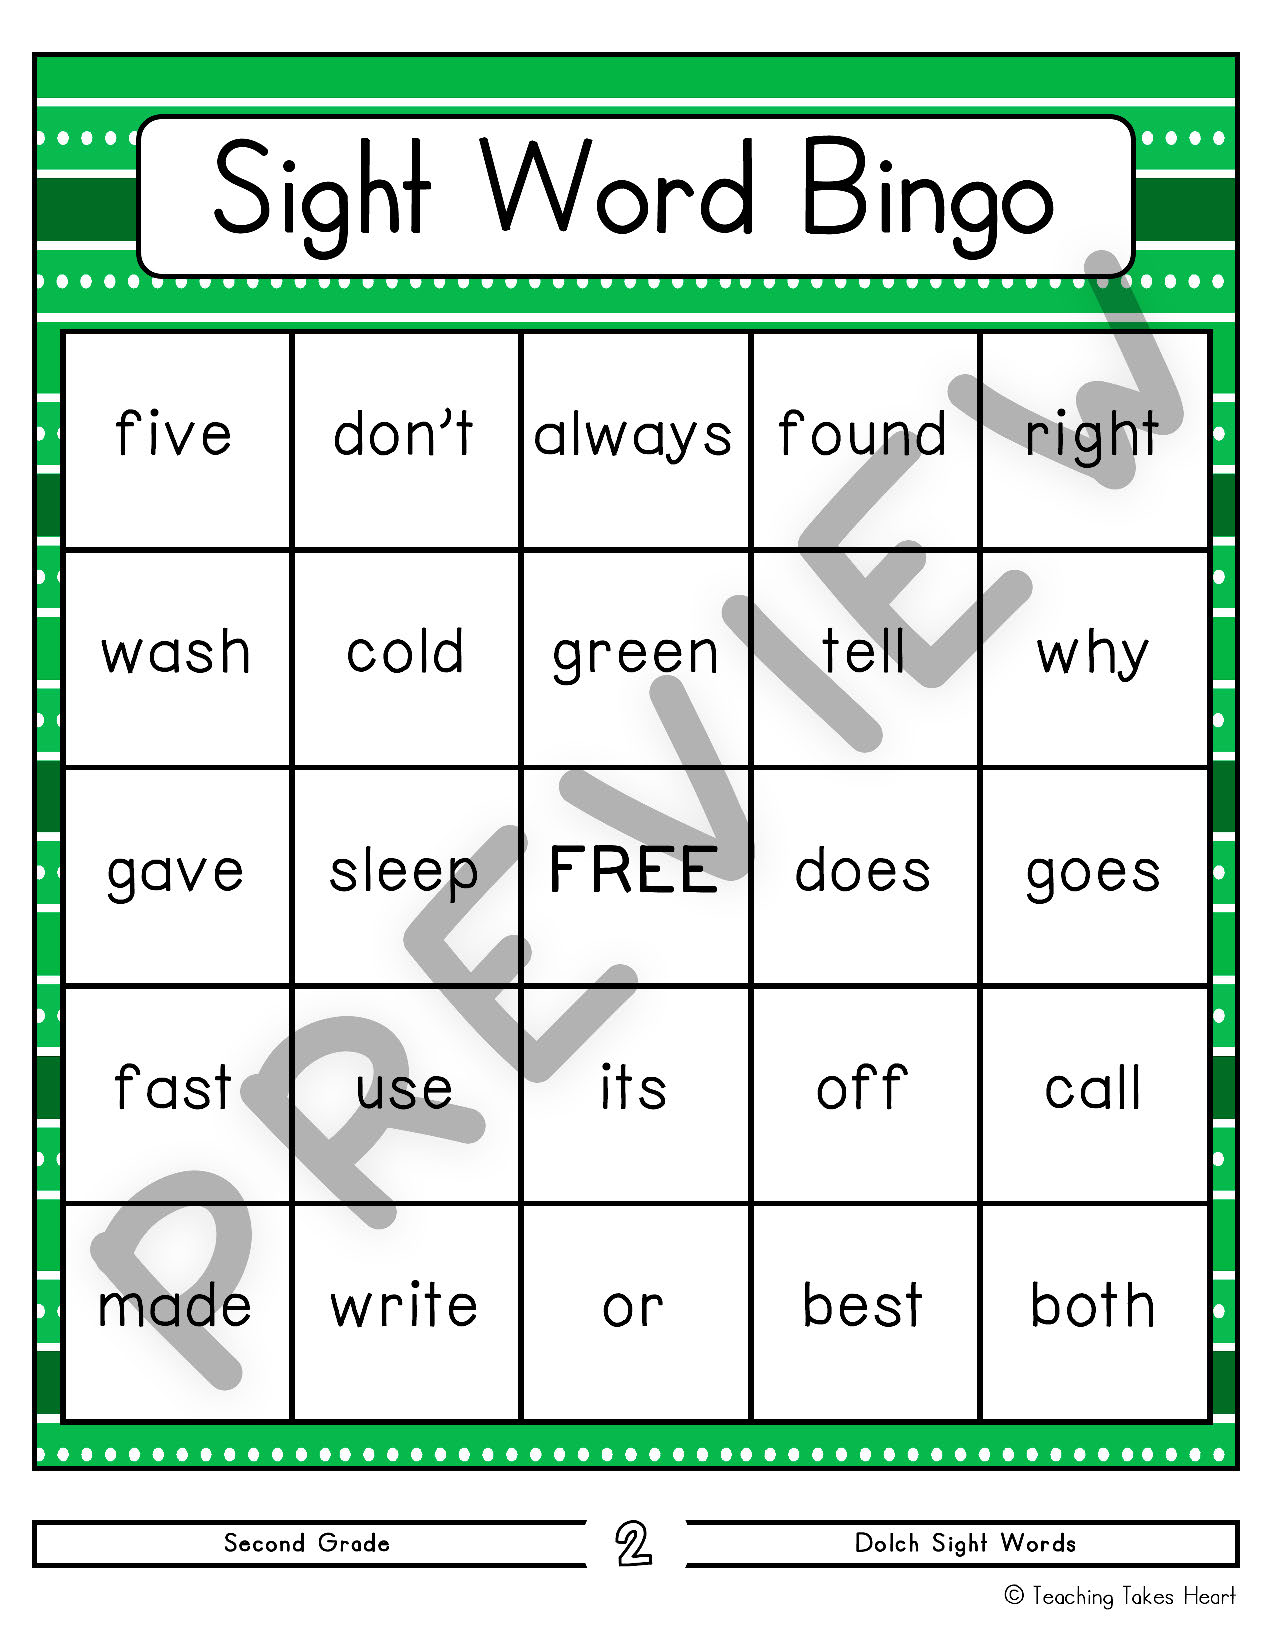 Sight Word Bingo: Second Grade | Teaching Takes Heart